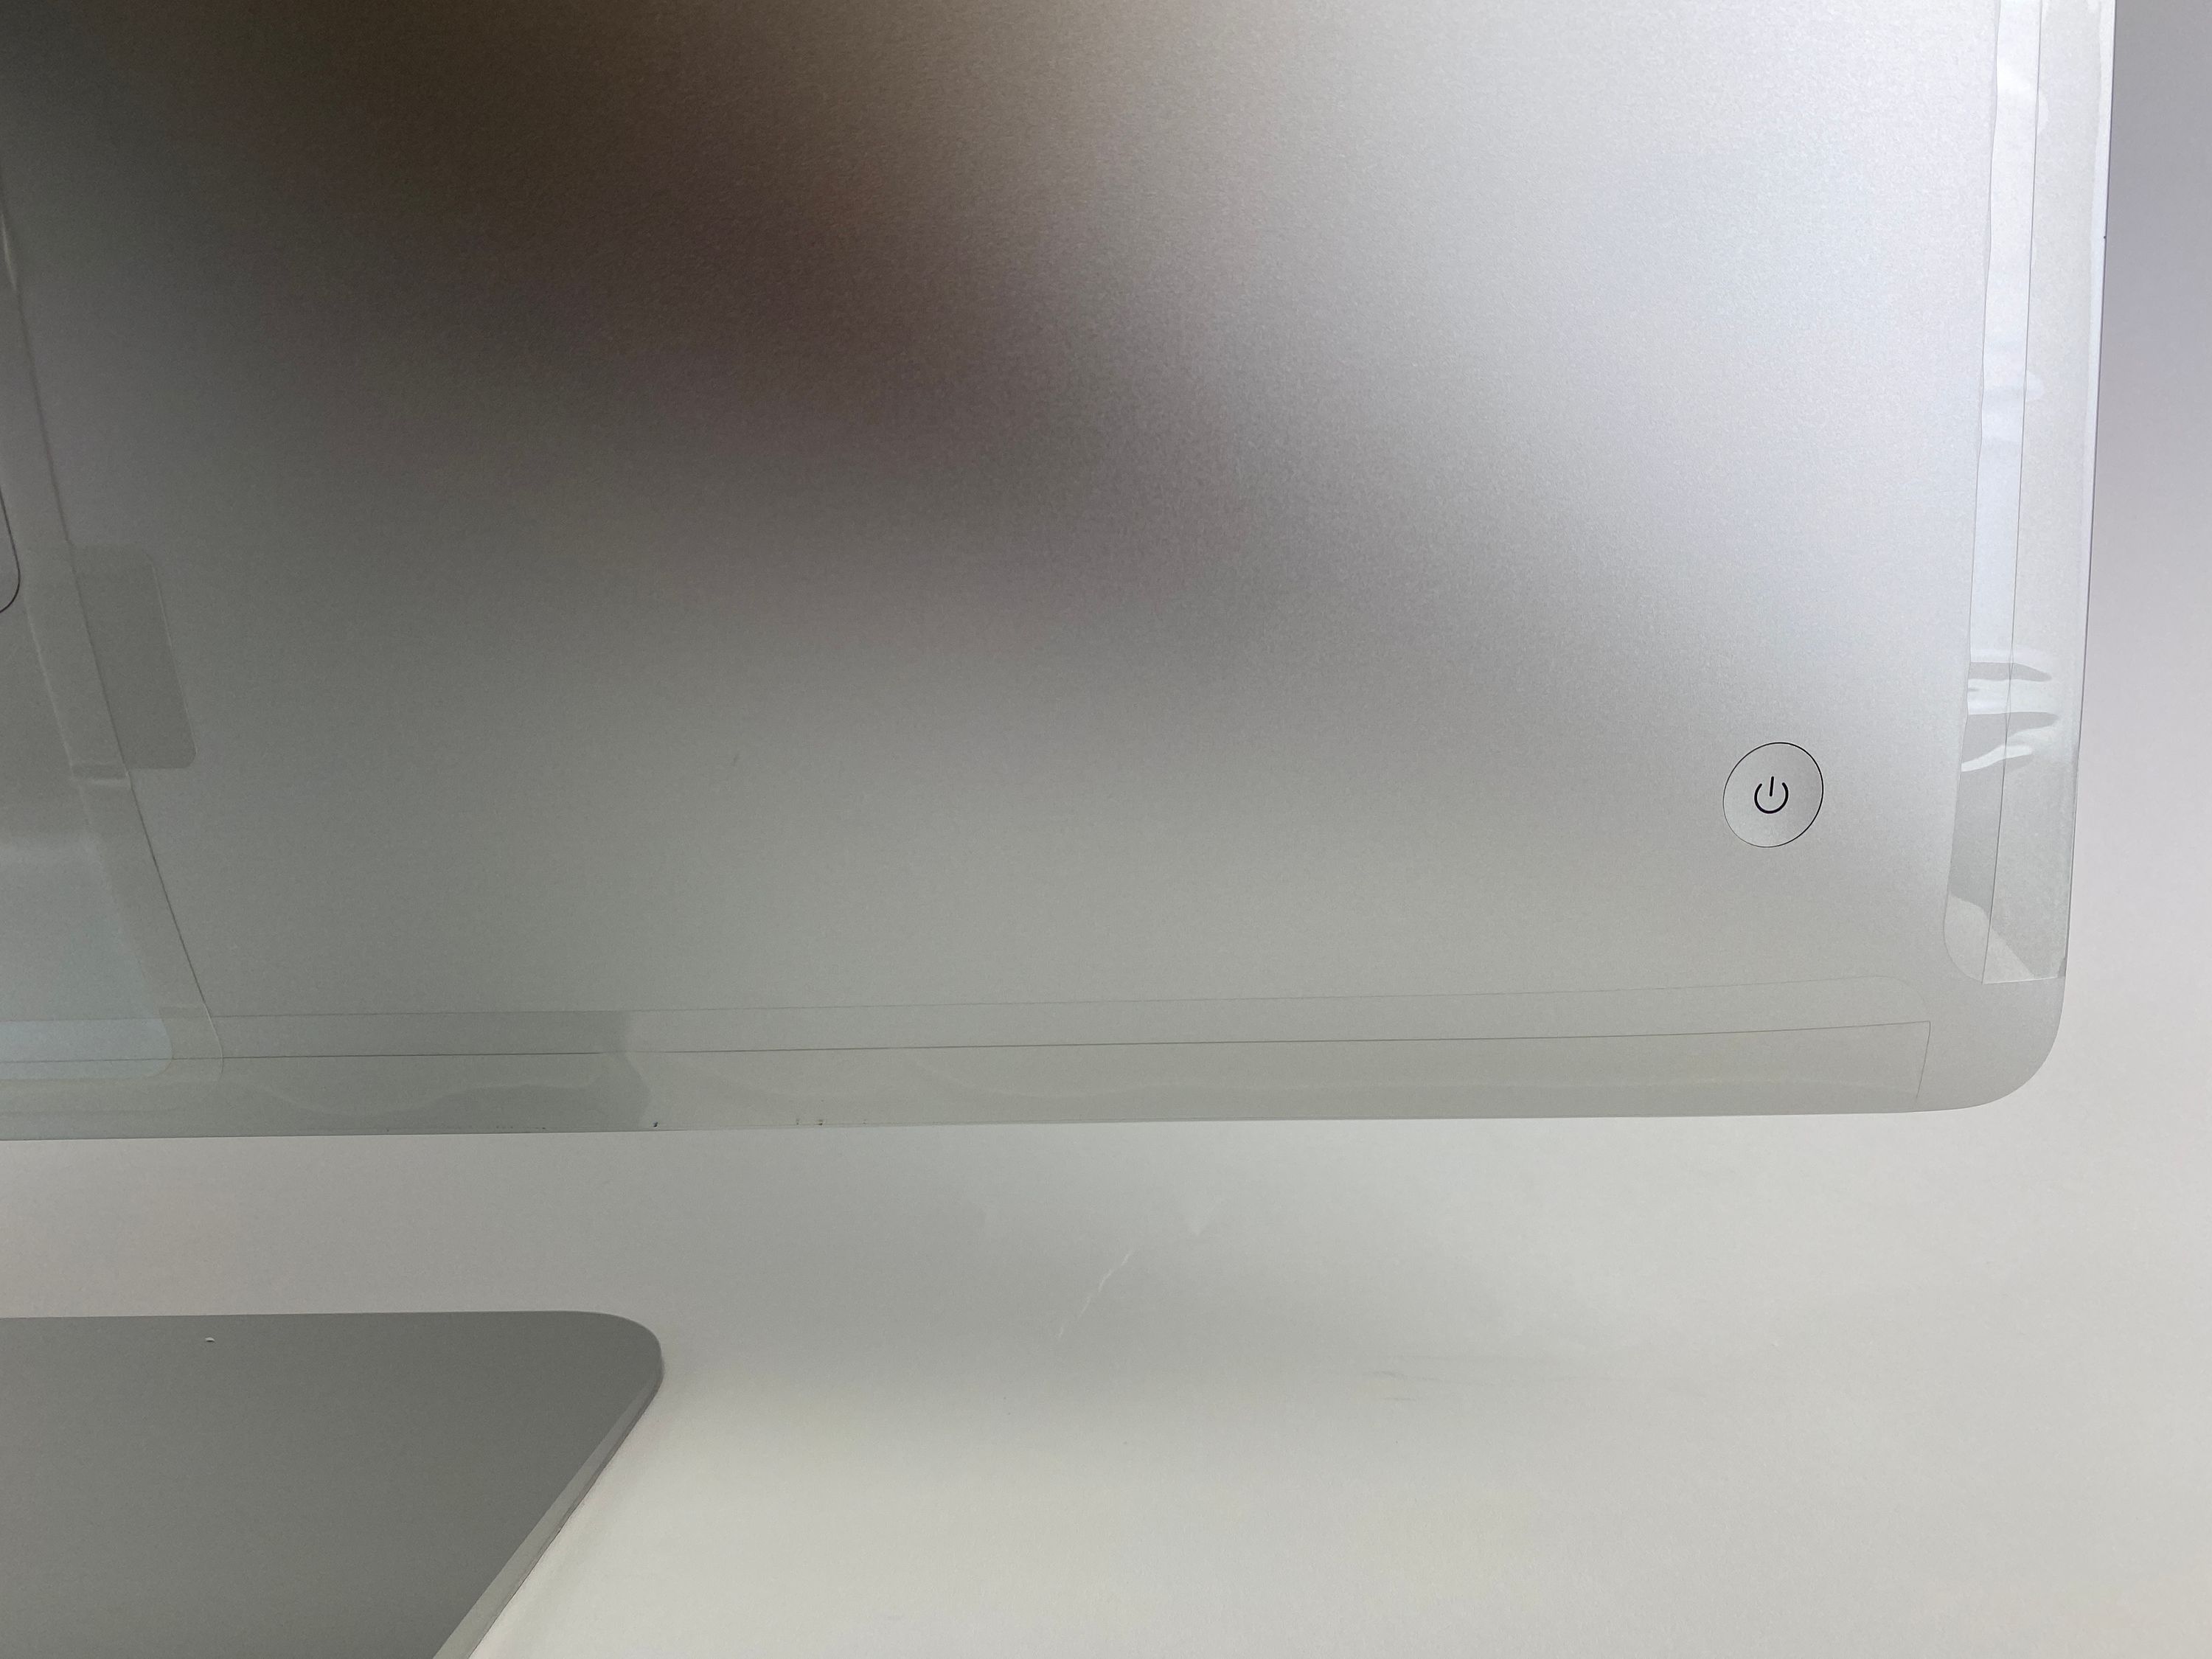 Apple iMac 27" (2020) 5K Retina i9 3,6 GHz 10-Core - Silber